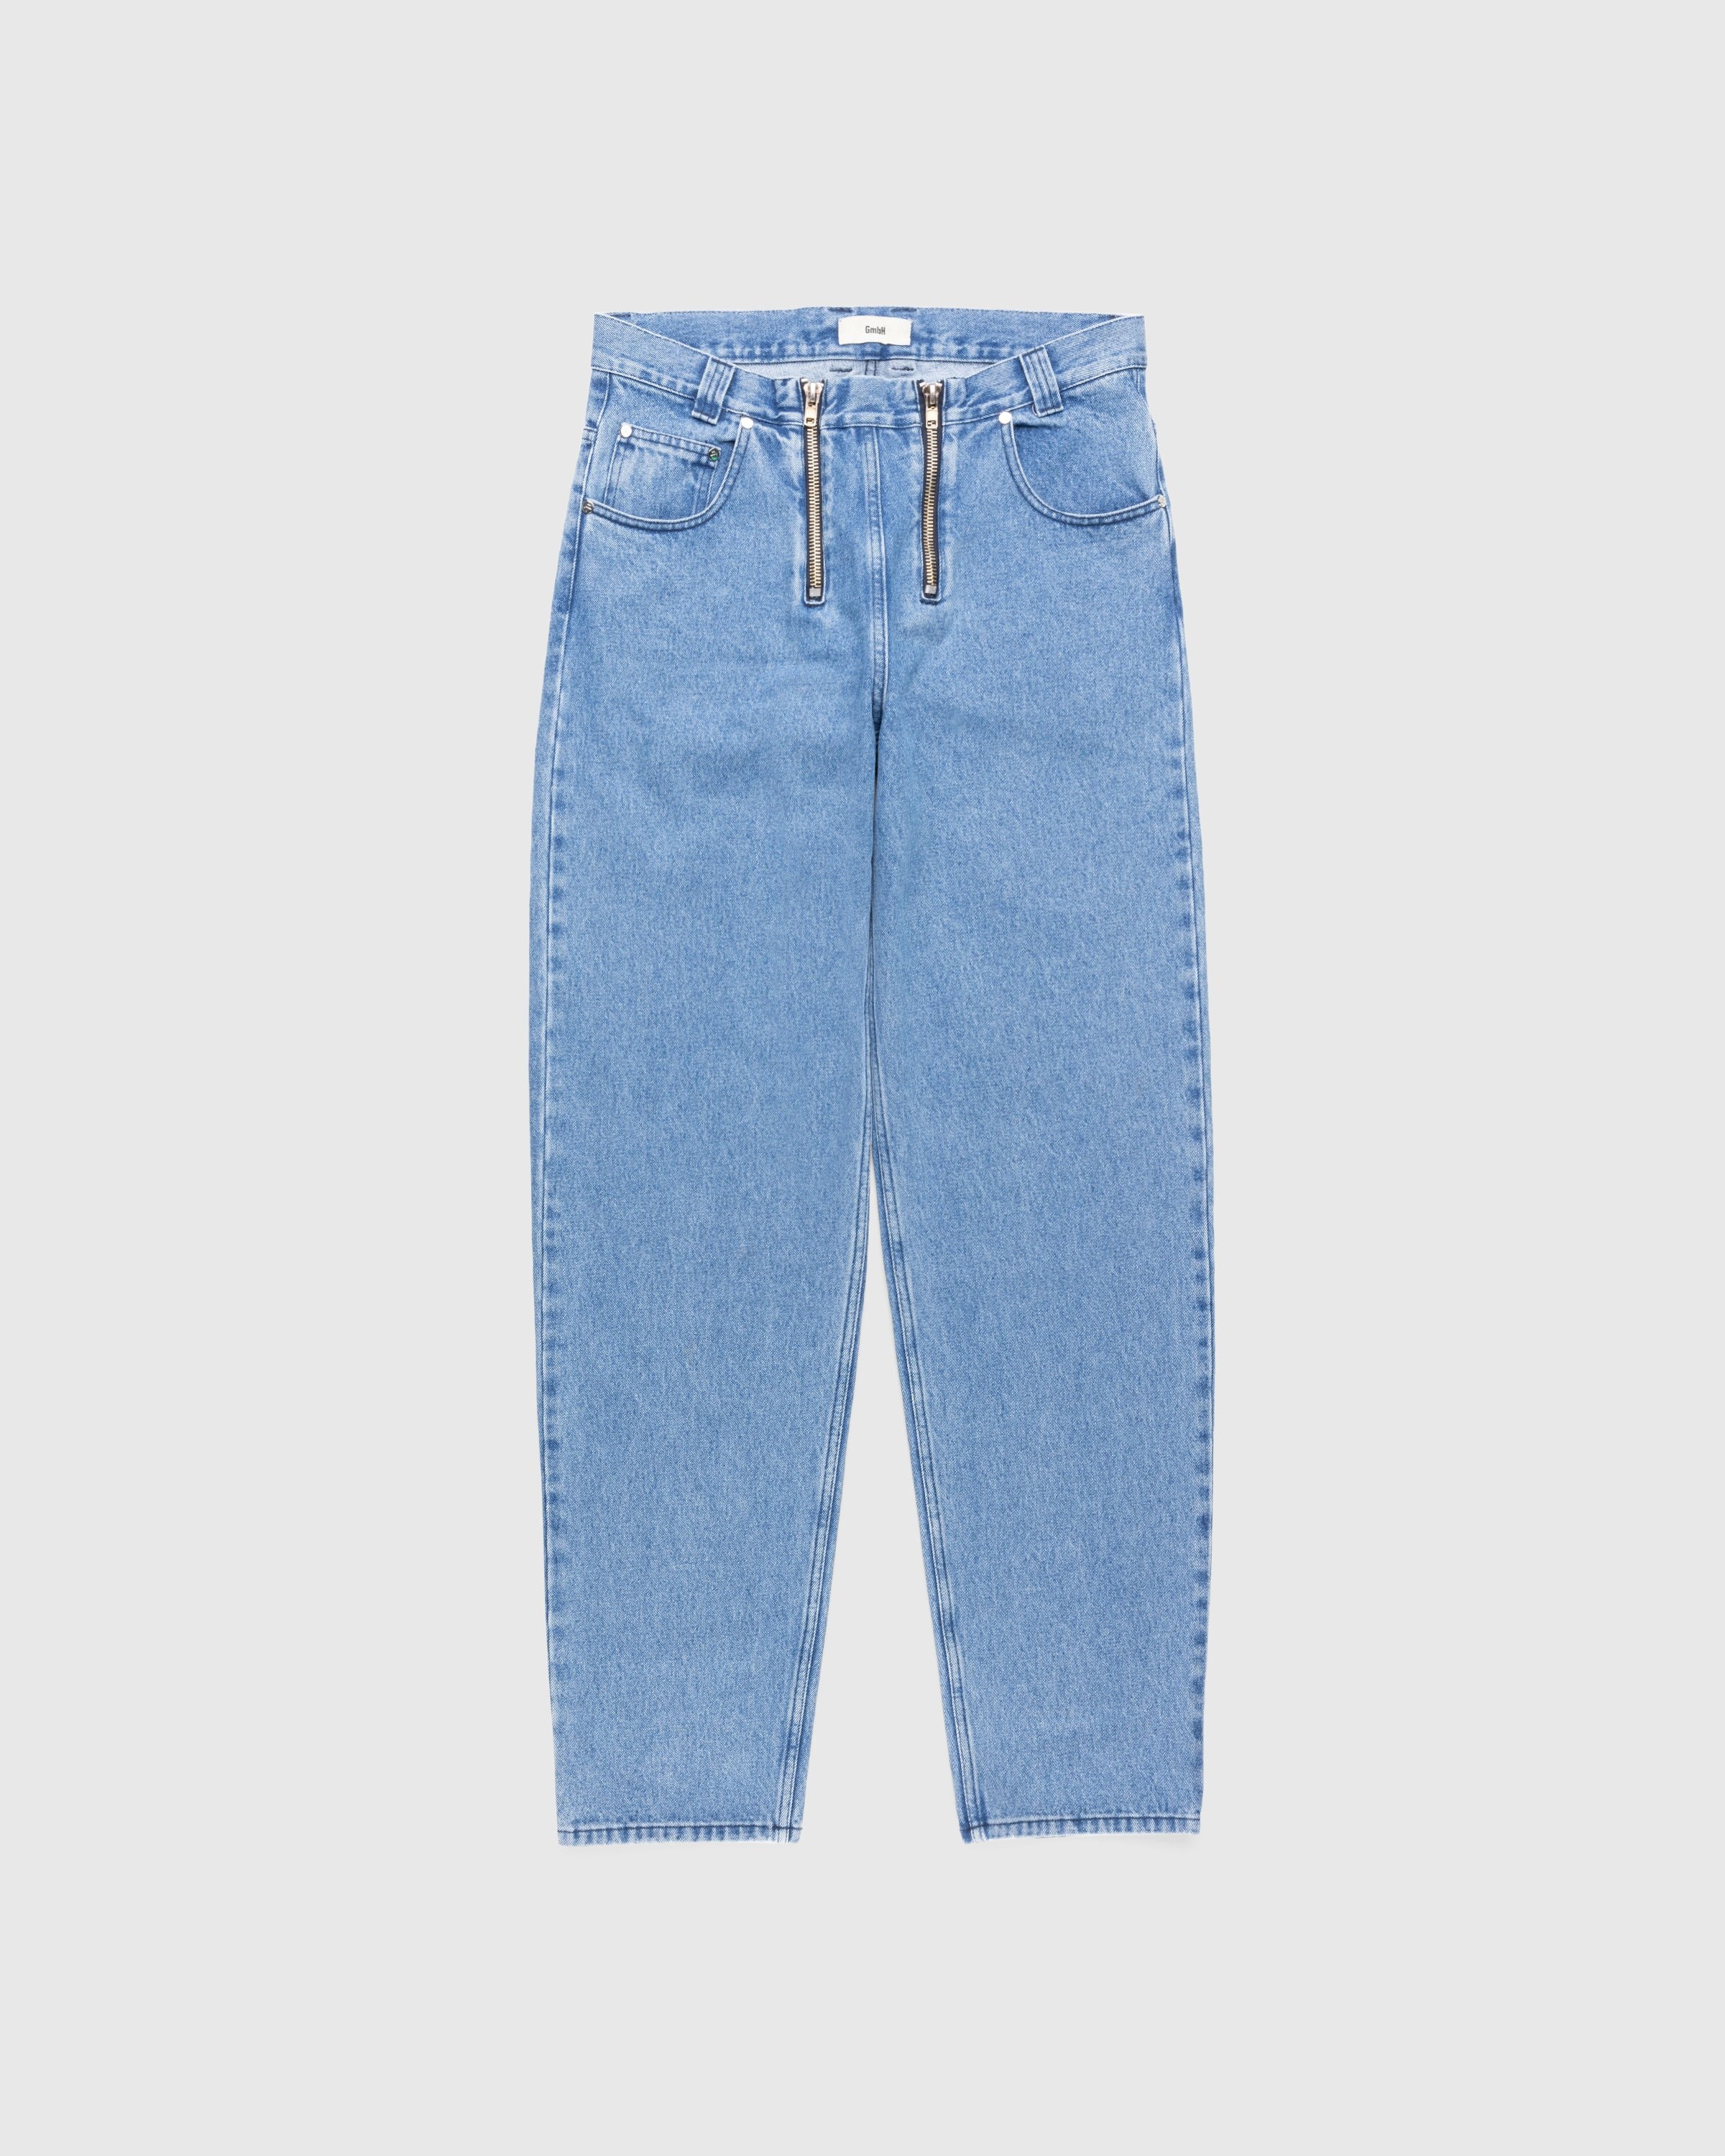 GmbH – Cyrus Denim Trousers Indigo Blue - Pants - Blue - Image 1